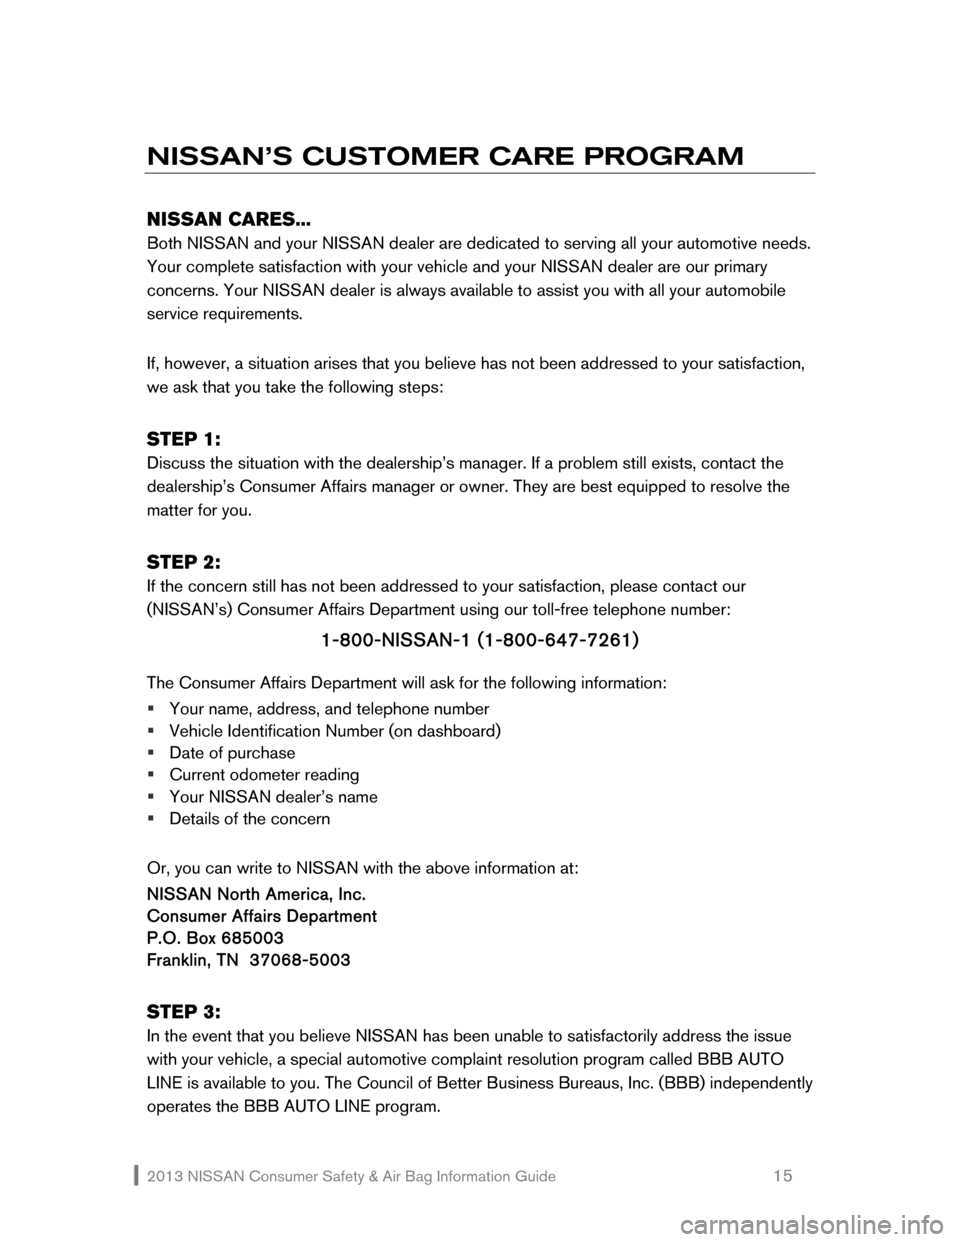 NISSAN XTERRA 2013 N50 / 2.G Consumer Safety Air Bag Information Guide 2013 NISSAN Consumer Safety & Air Bag Information Guide                                                   15 
NISSAN’S CUSTOMER CARE PROGRAM 
 
NISSAN CARES... 
Both NISSAN and your NISSAN dealer ar